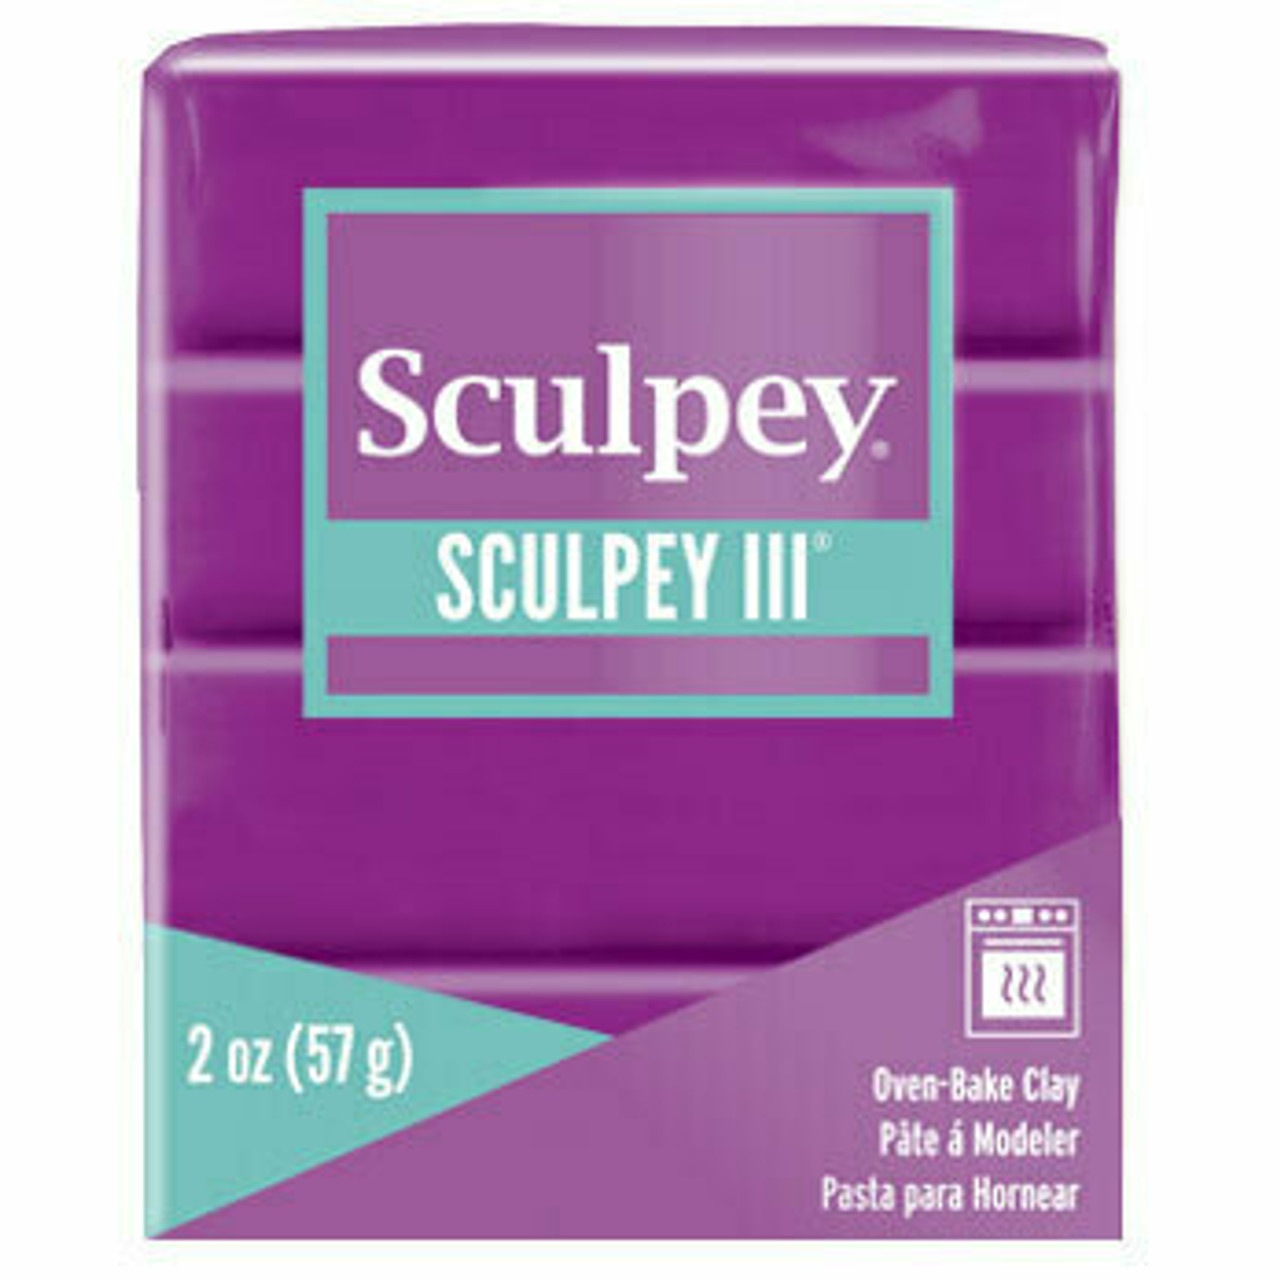 Sculpey III Violet 2oz (57g)